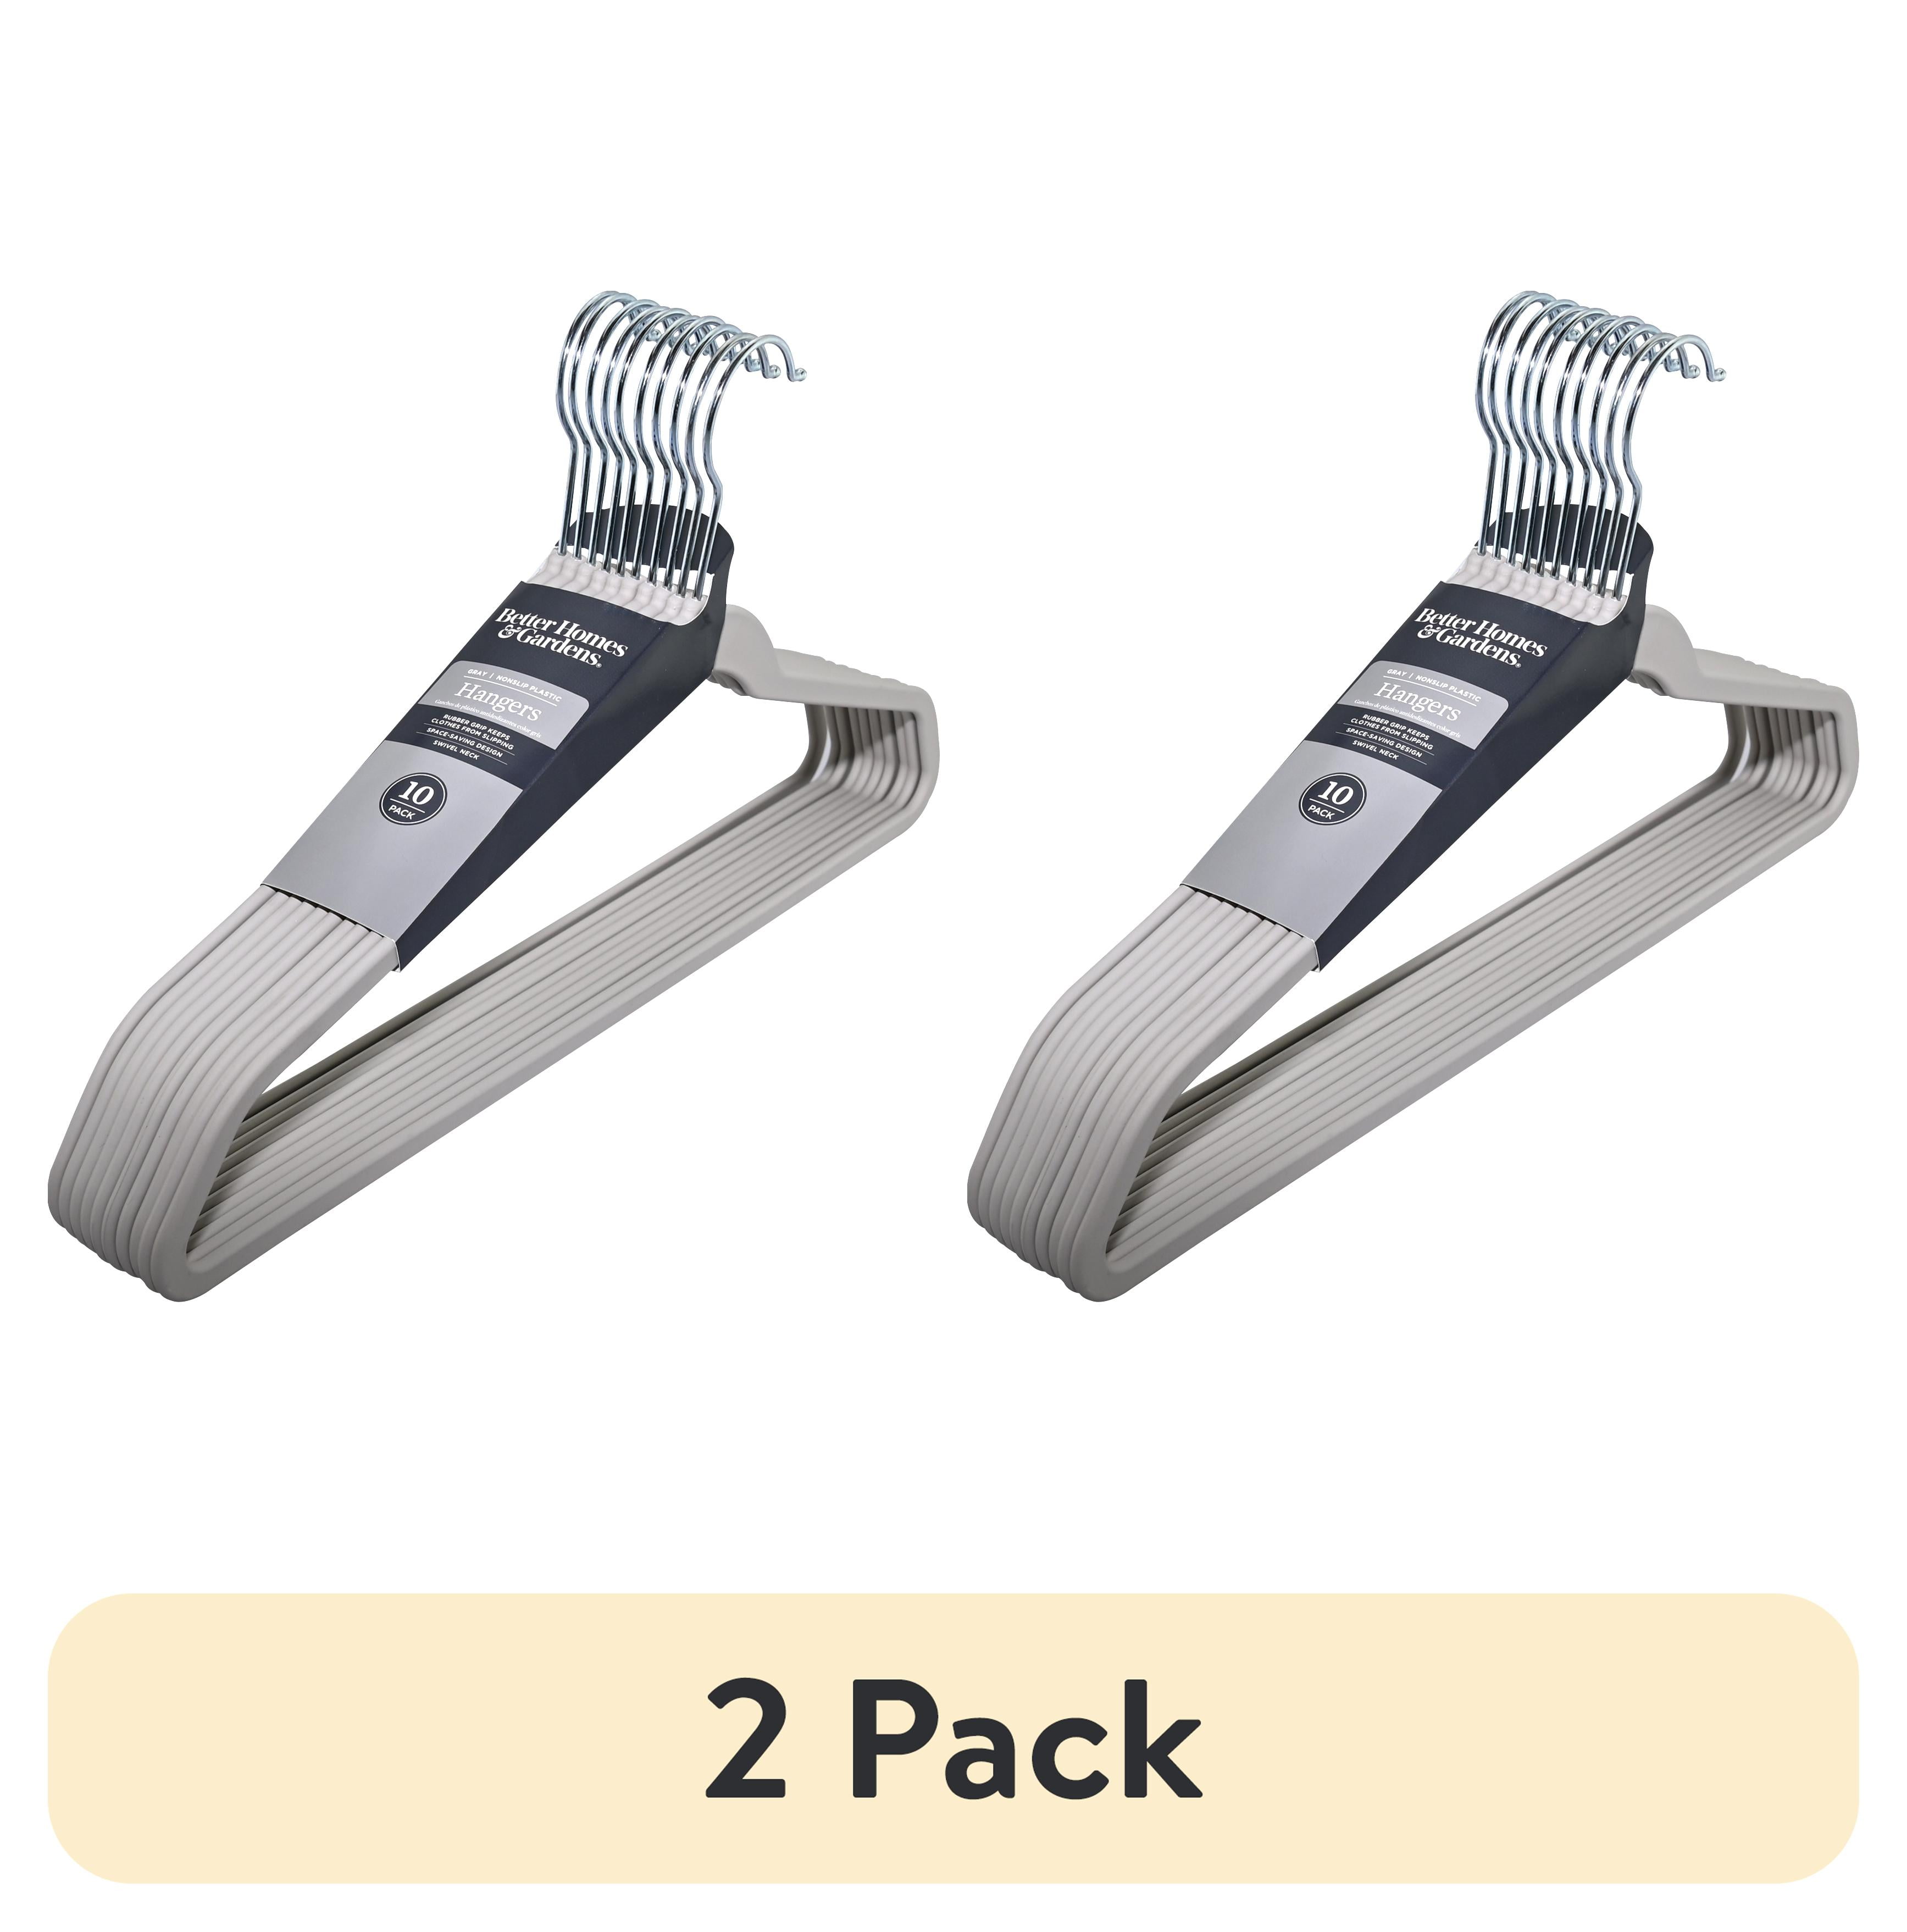 Style Selections 10-Pack Plastic Non-Slip Grip Clothing Hanger (White)